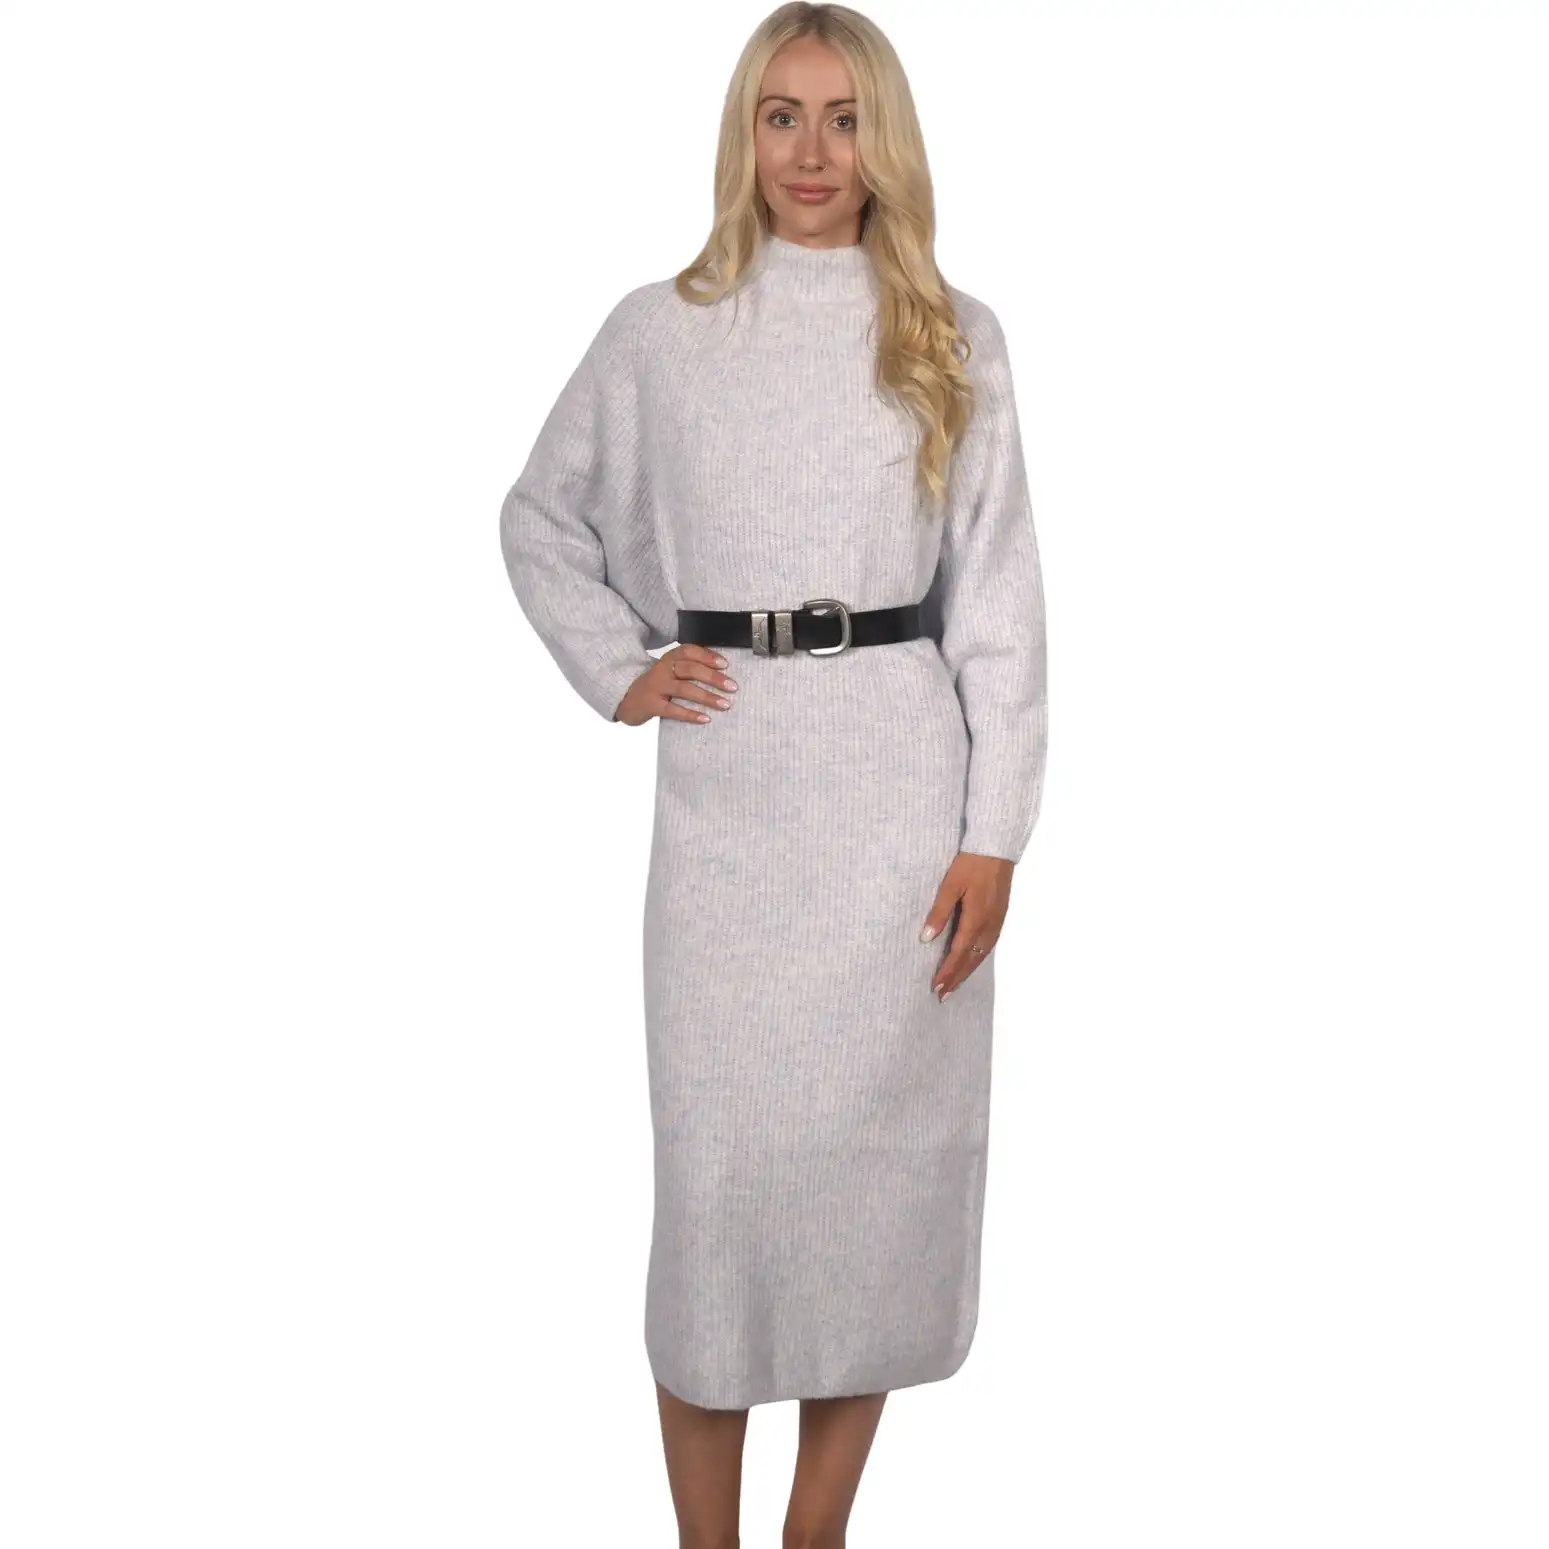 Topshop Women's Maternity Knit Midi Dress - Grey Blue